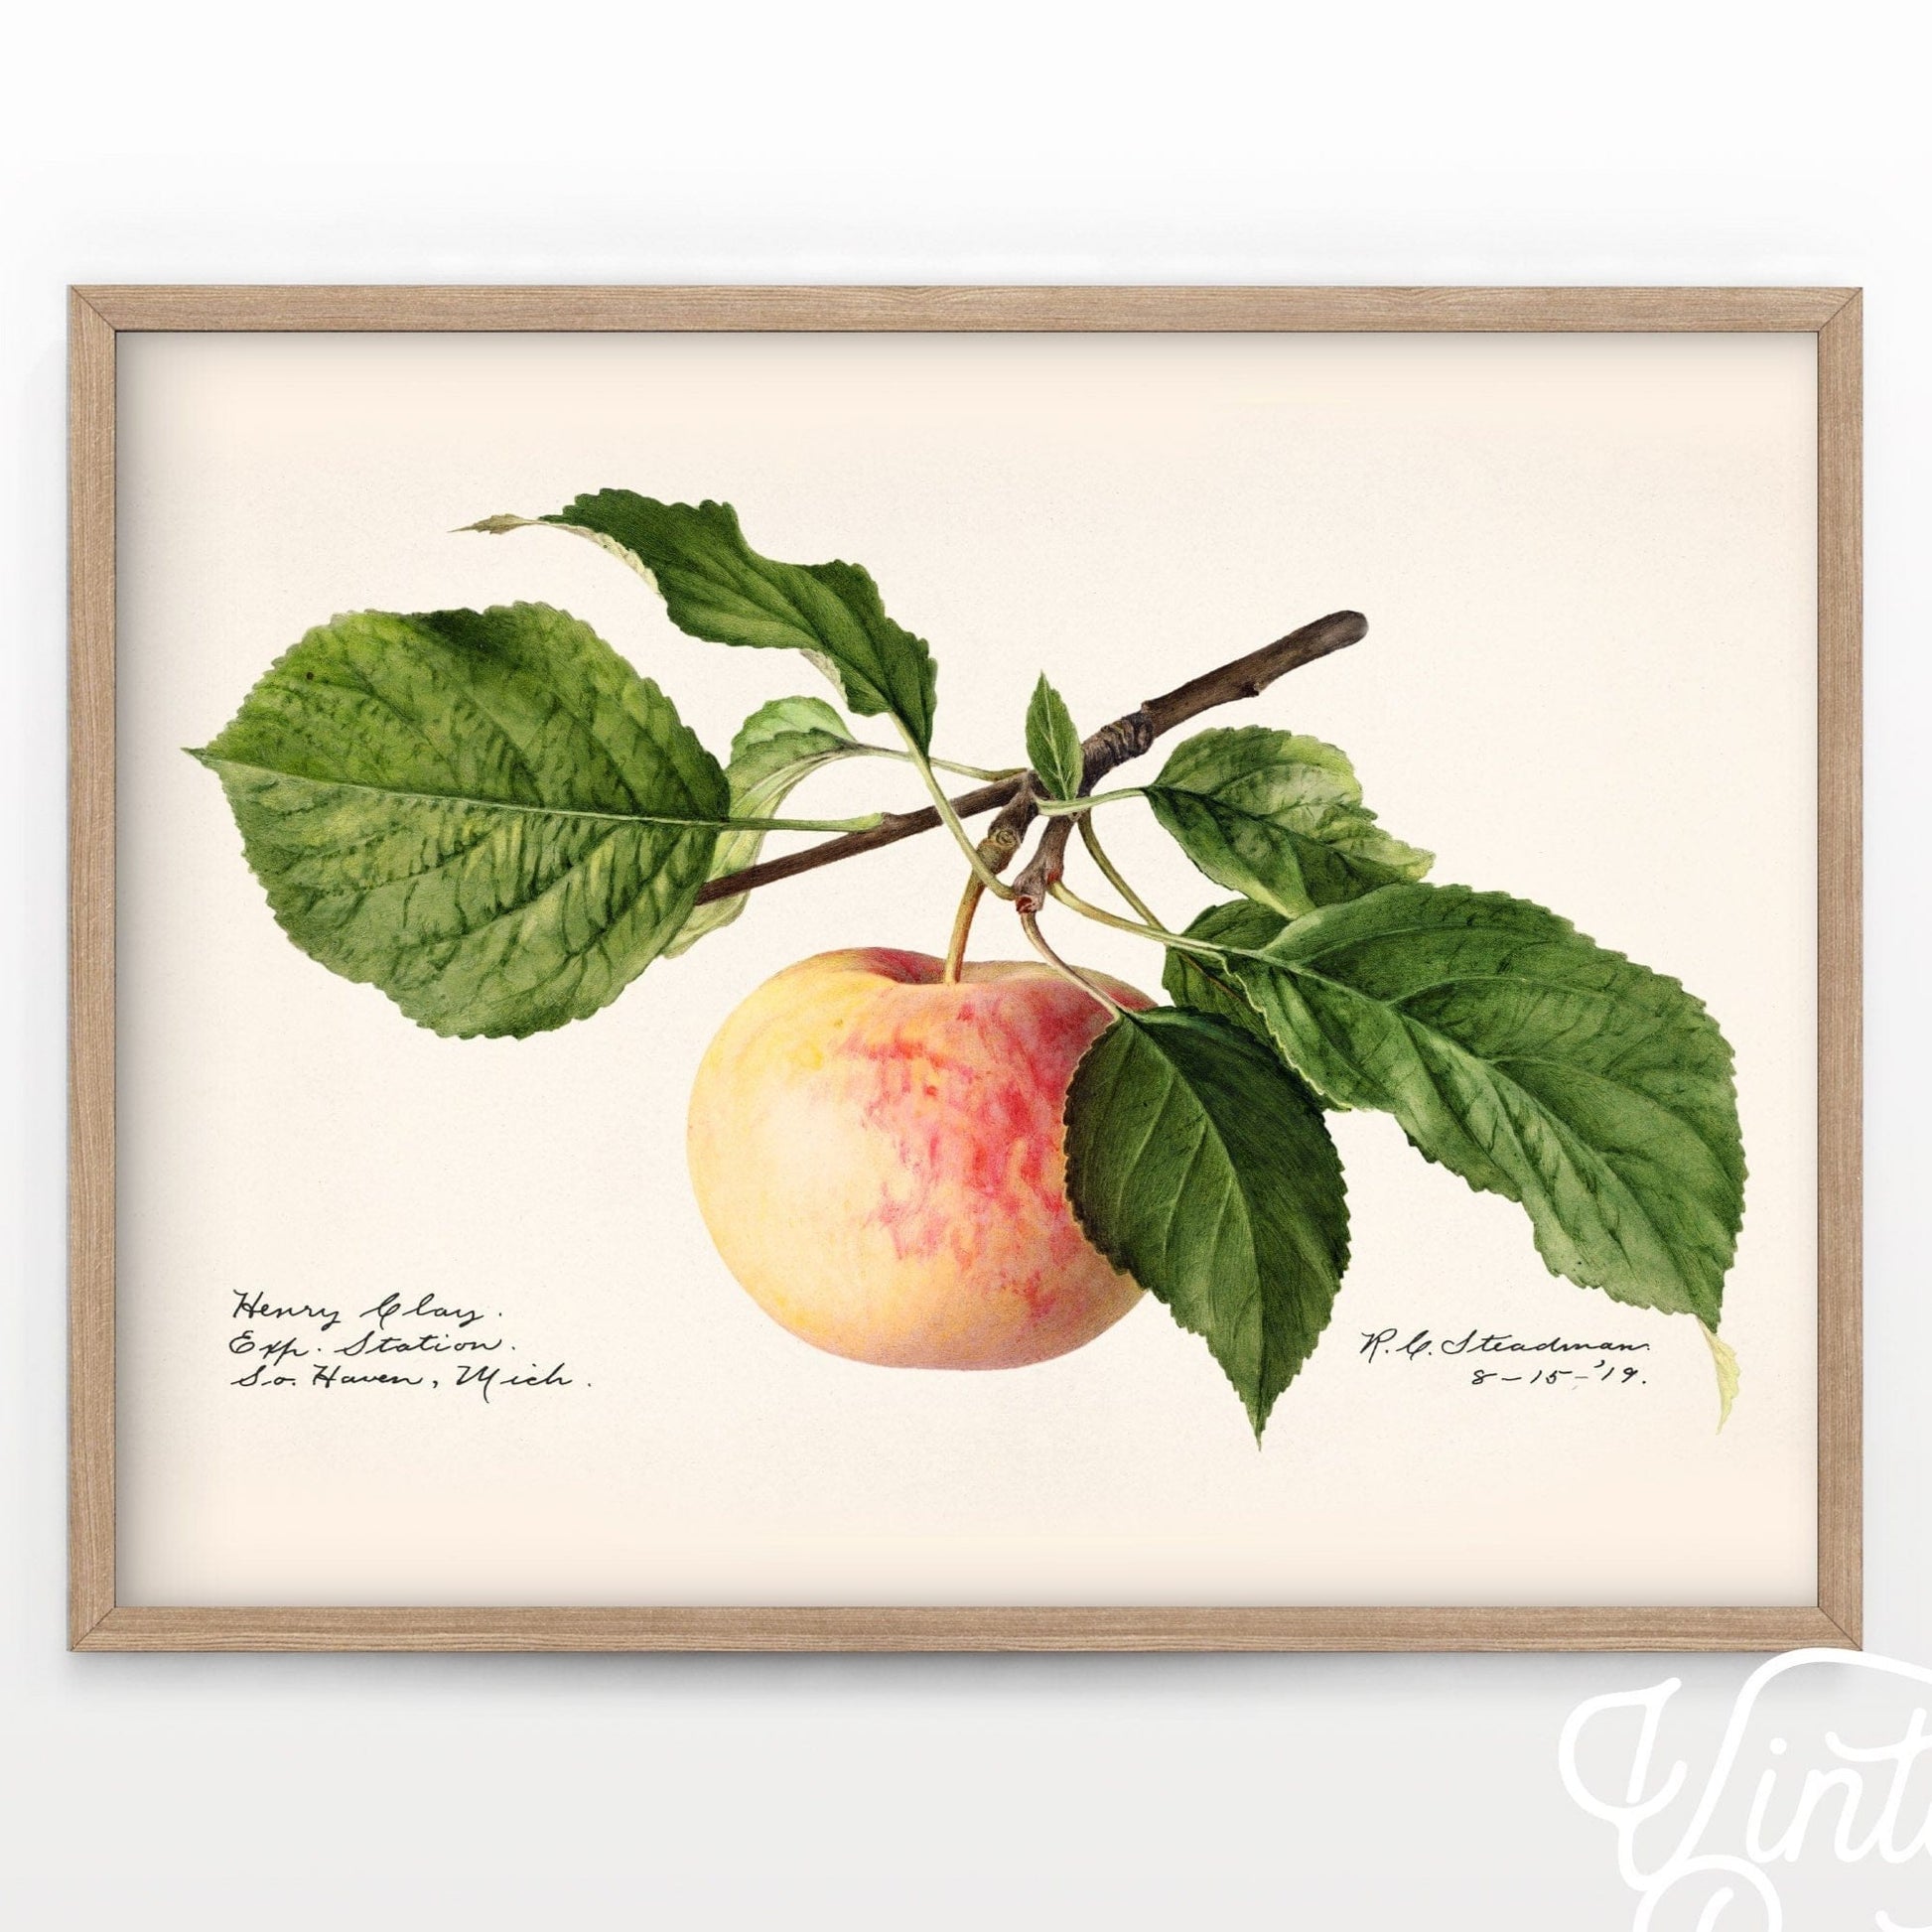 Home Poster Decor Apple Fruit Print, Vintage Apple Poster, Botanical Fruit, Vintage Kitchen, Minimalist Print, Tropical Wall Art, Farmhouse Decor up to 44x66"